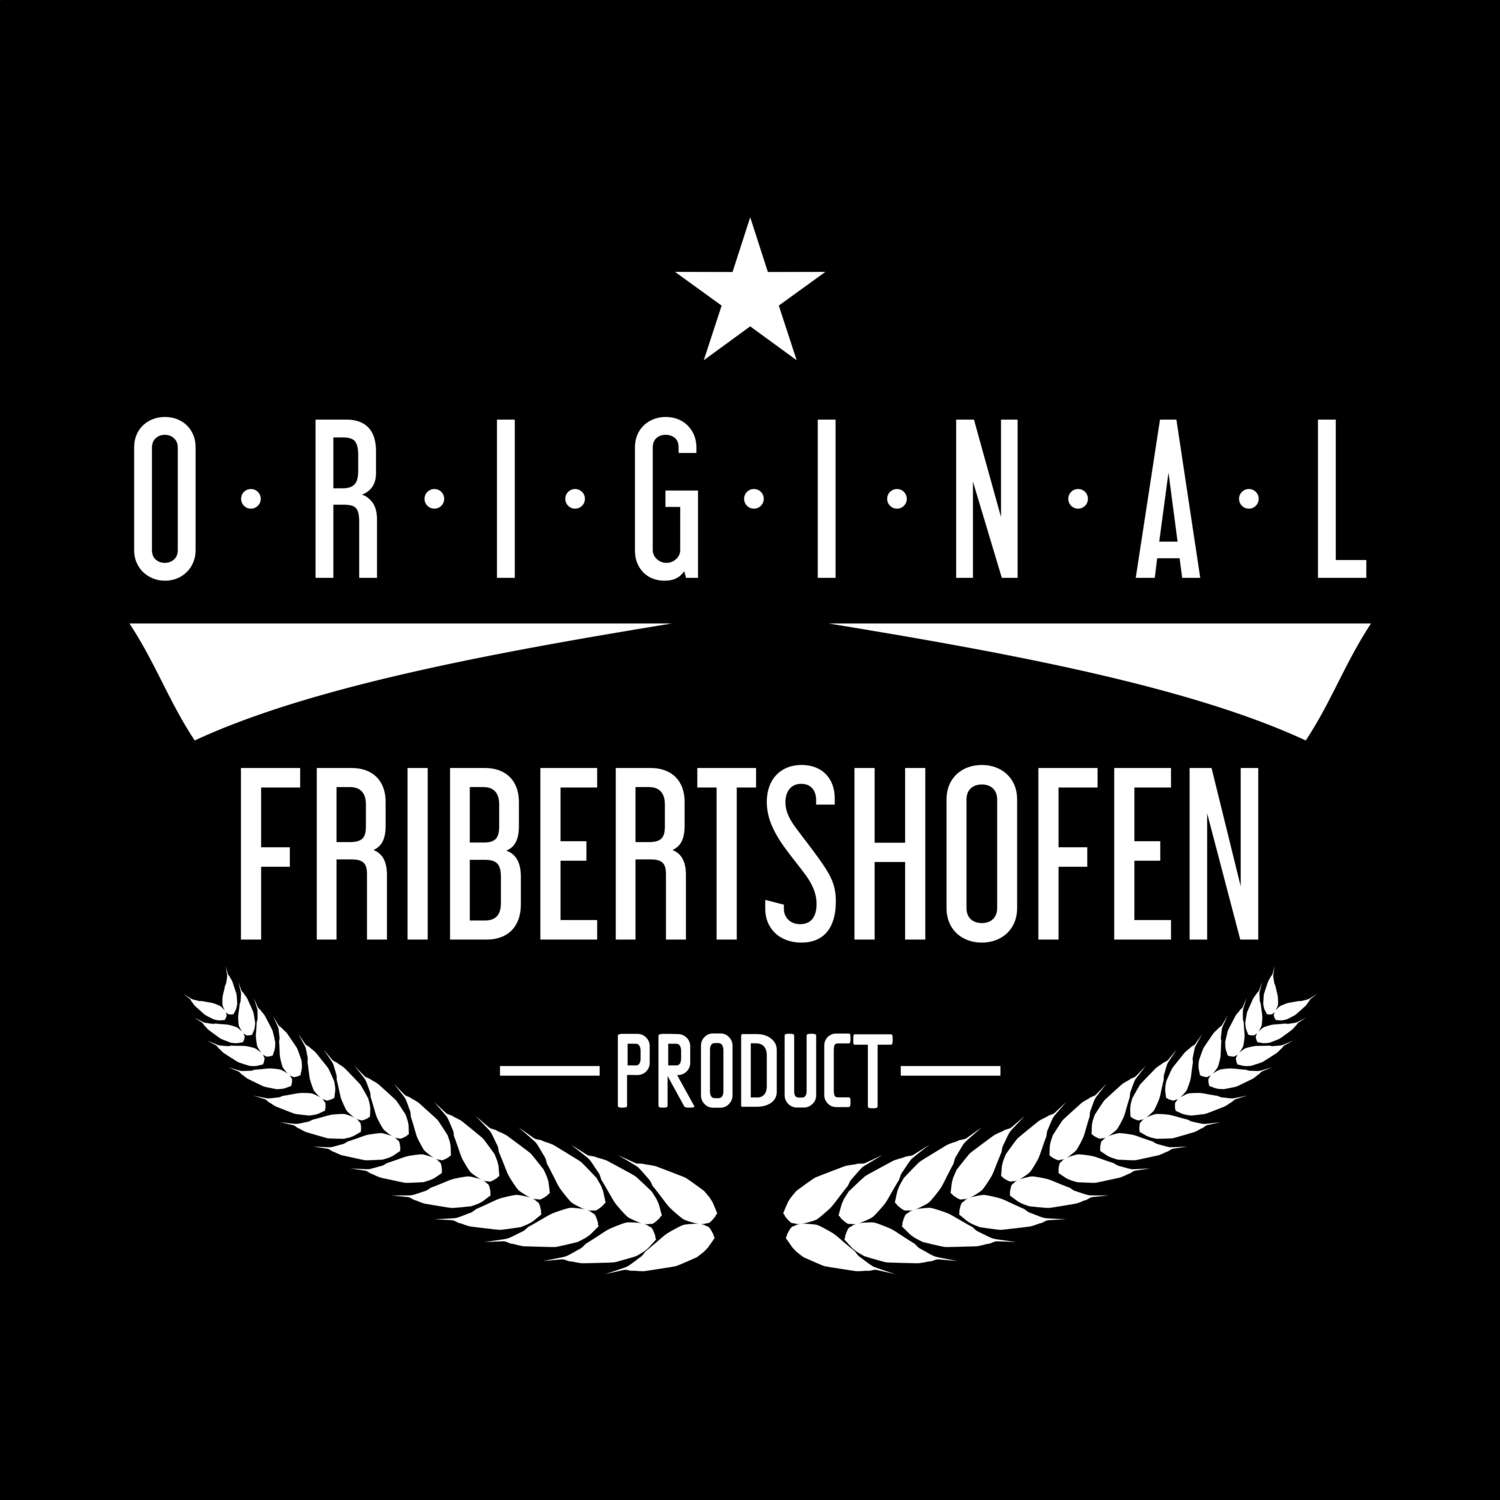 Fribertshofen T-Shirt »Original Product«